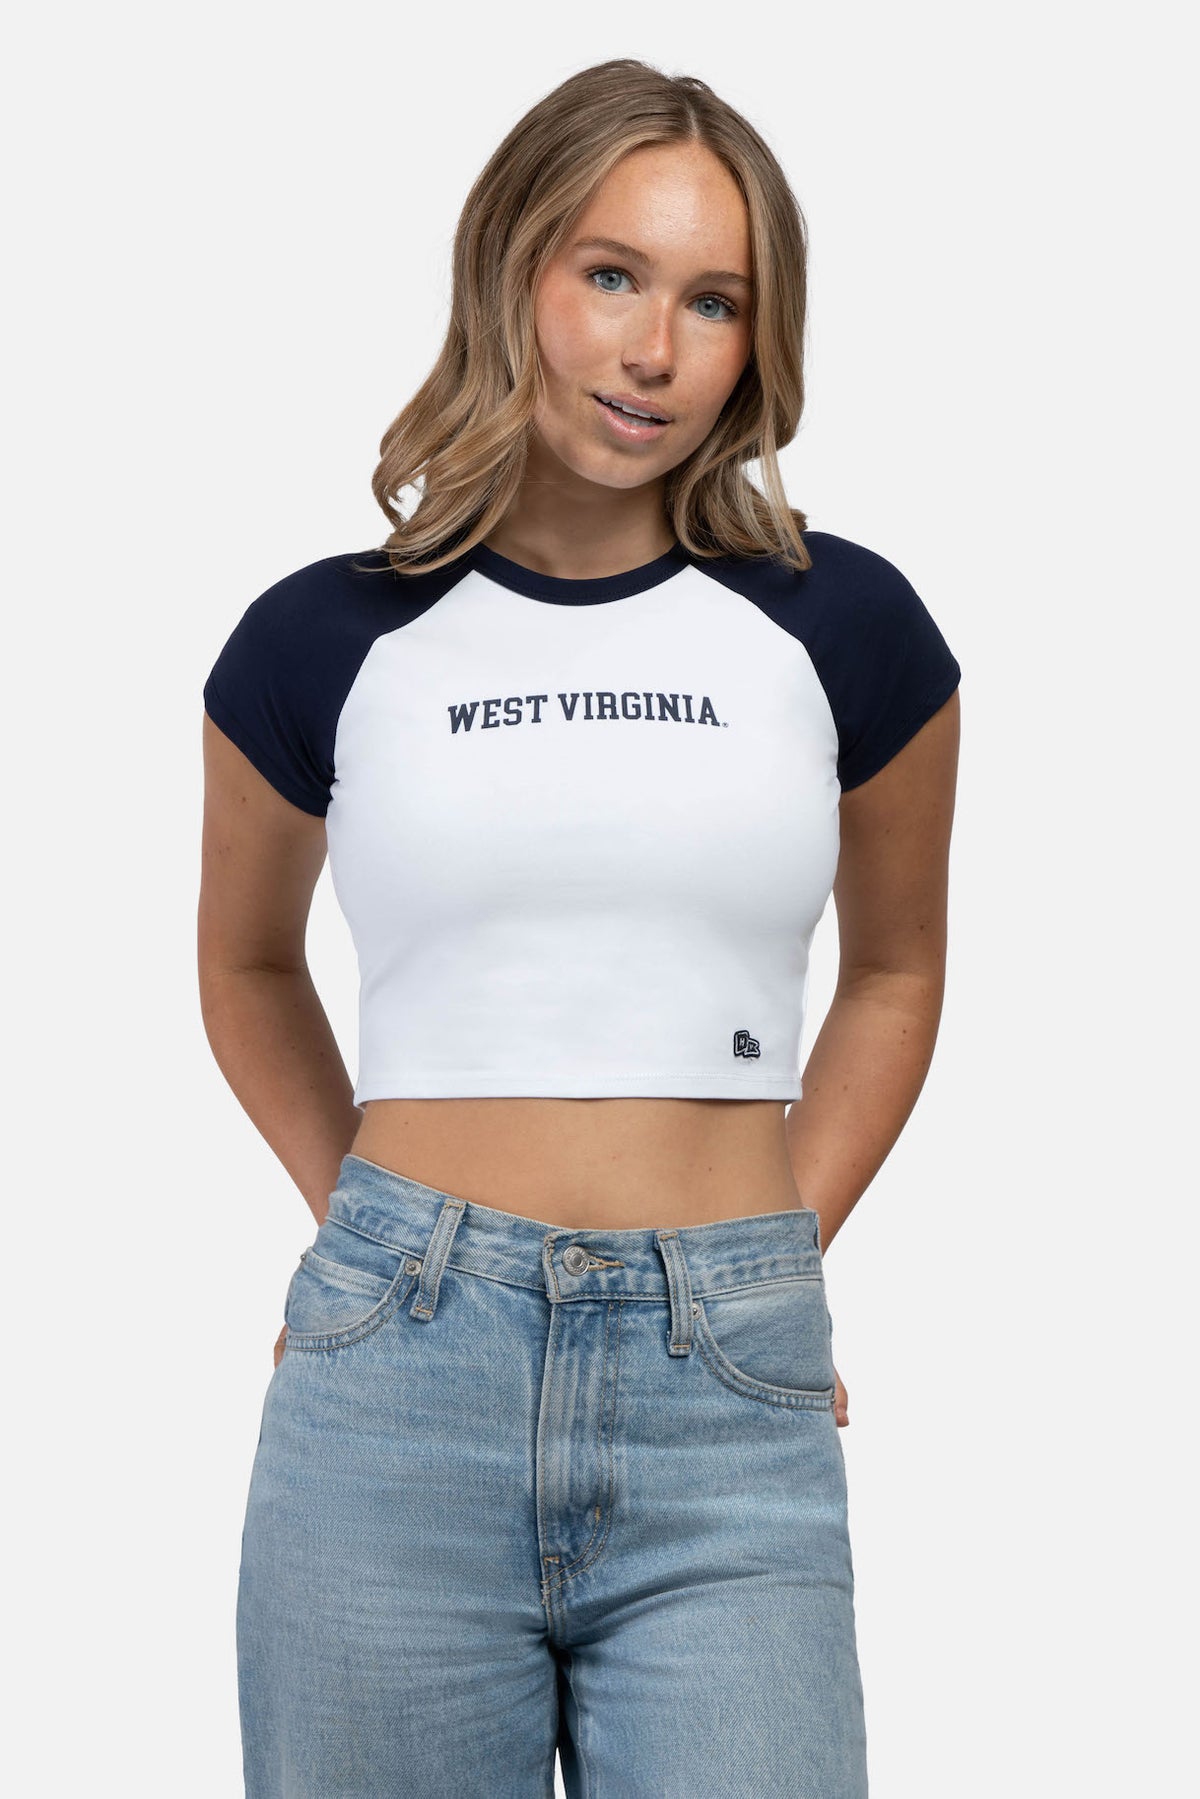 West Virginia Homerun Tee